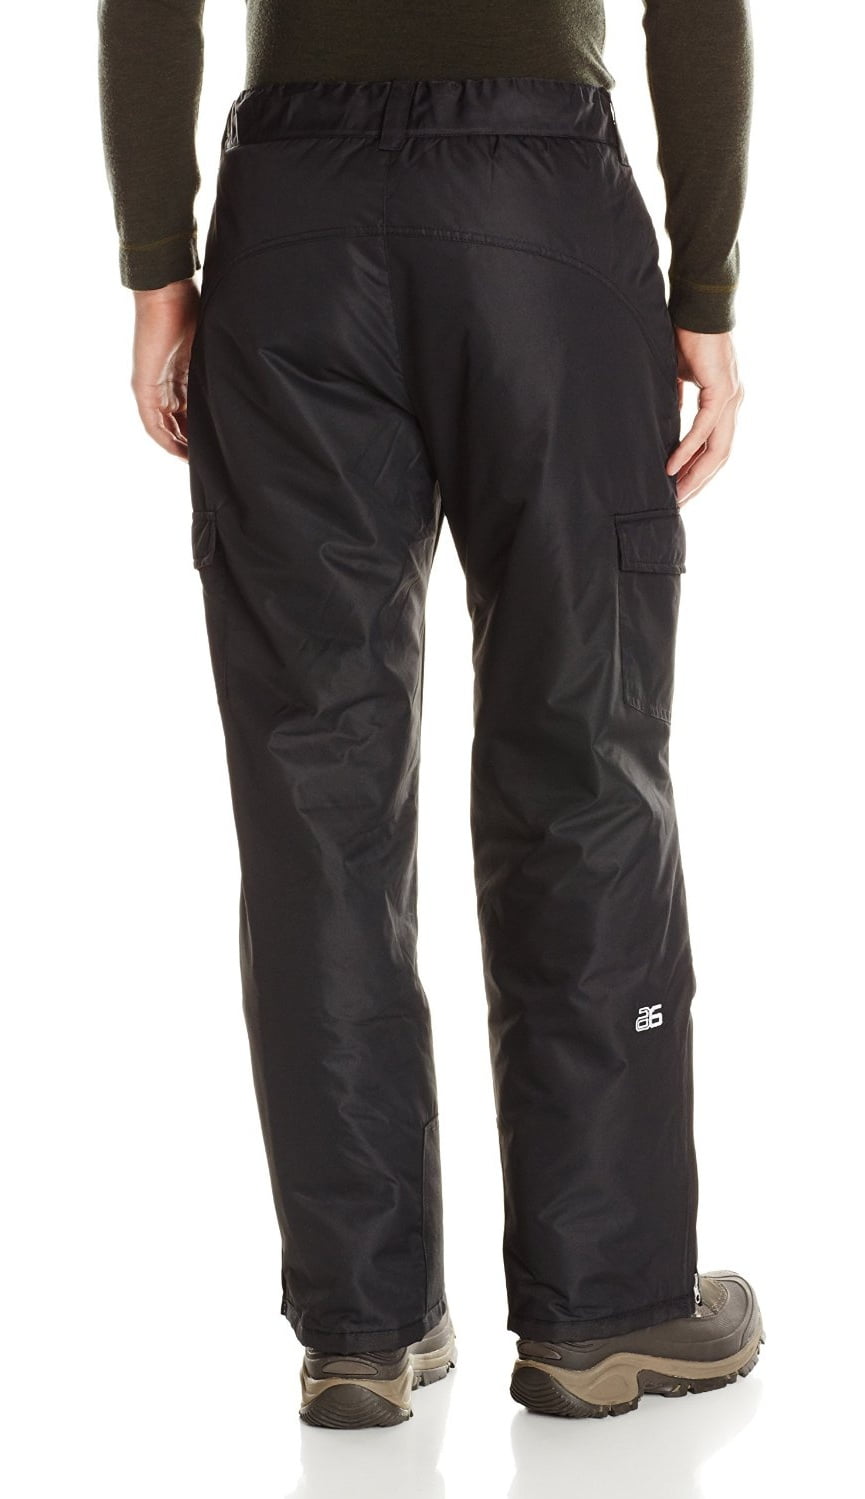 特別価格】Arctix Men's Mountain Premium Snowboard Cargo Pants, Black, Medium/32